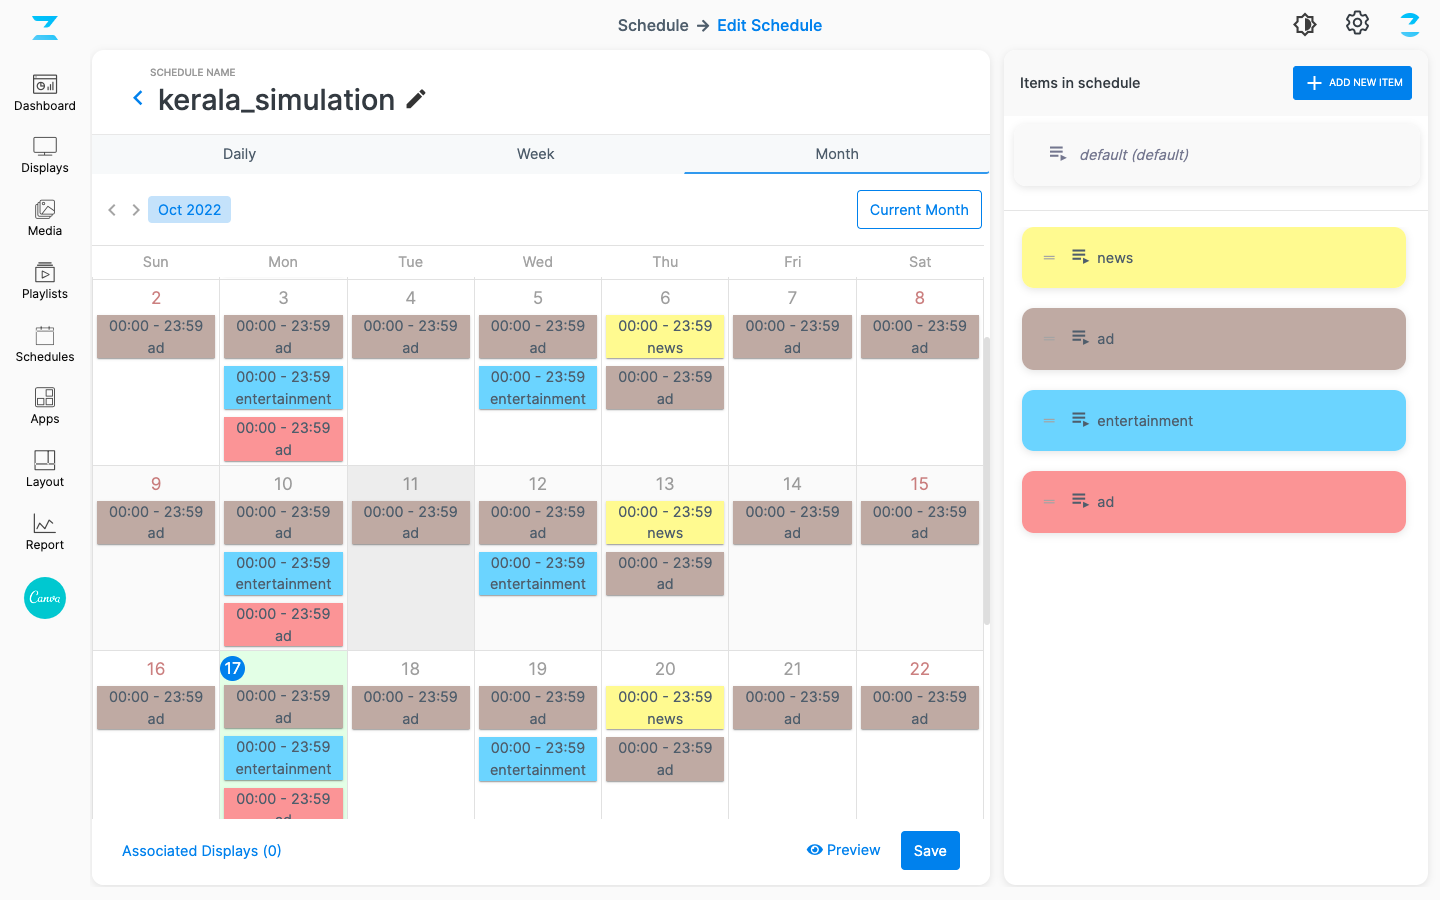 Calendar based Scheduling